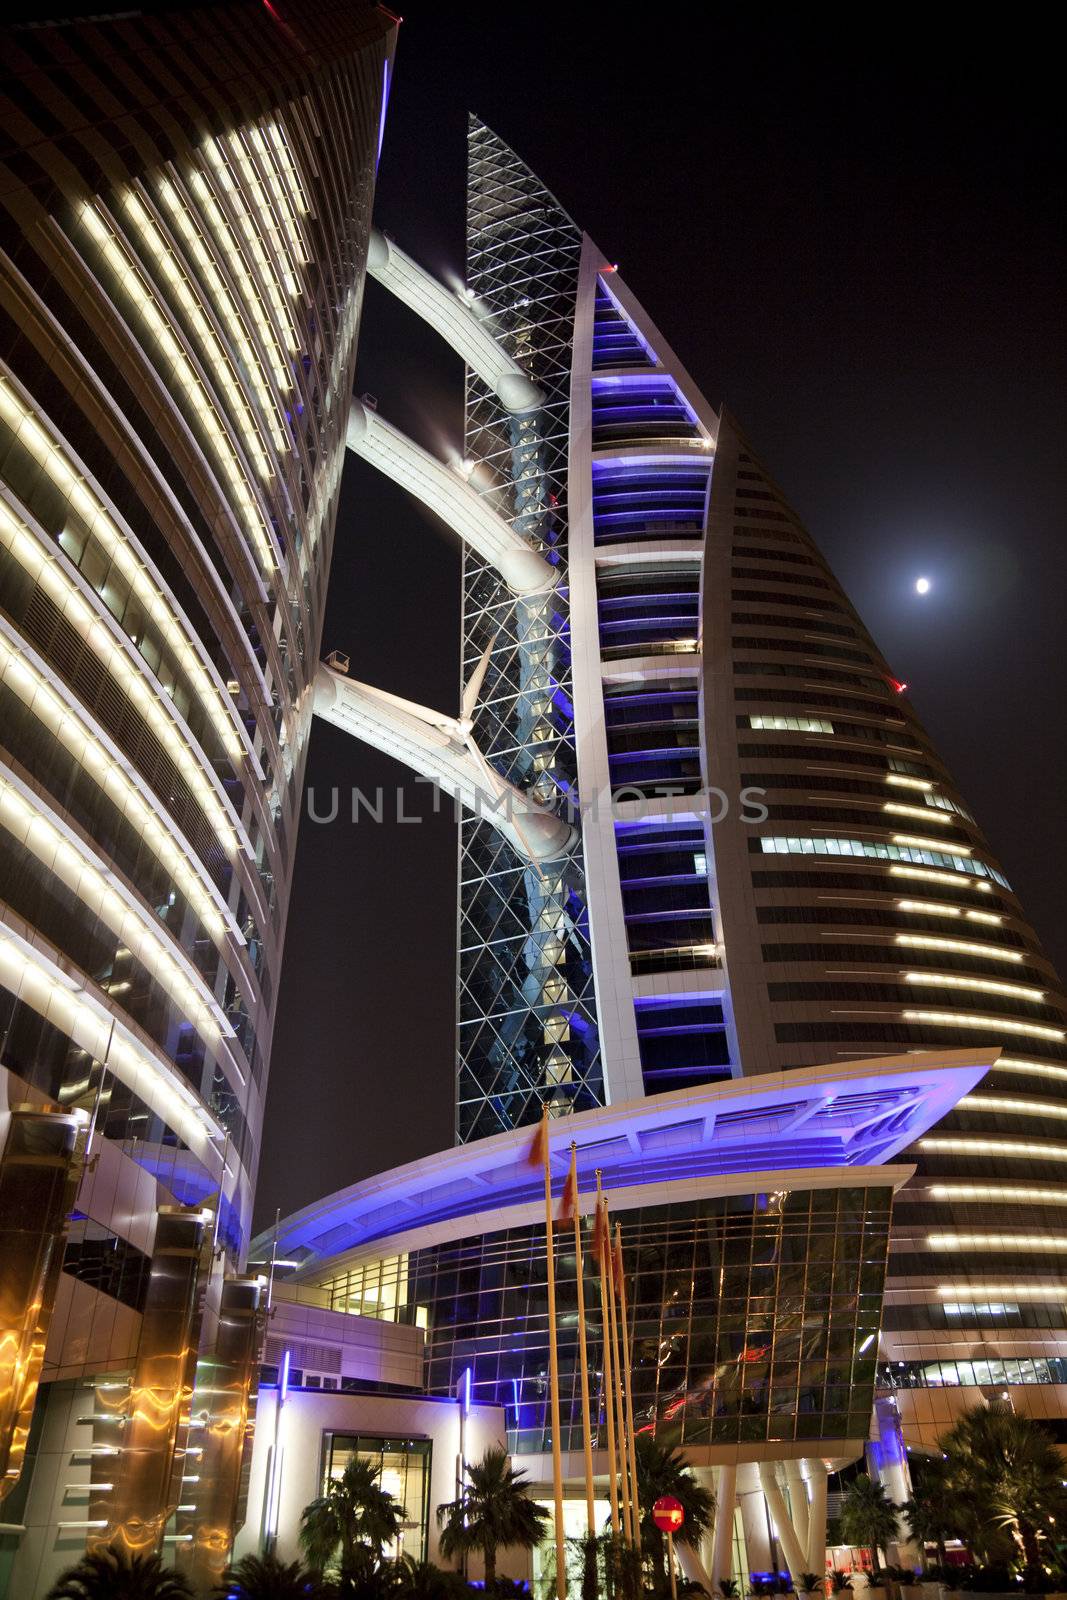 Night image of Bahrain's iconic building, the Bahrain World Trade Center, Manama, Bahrain.